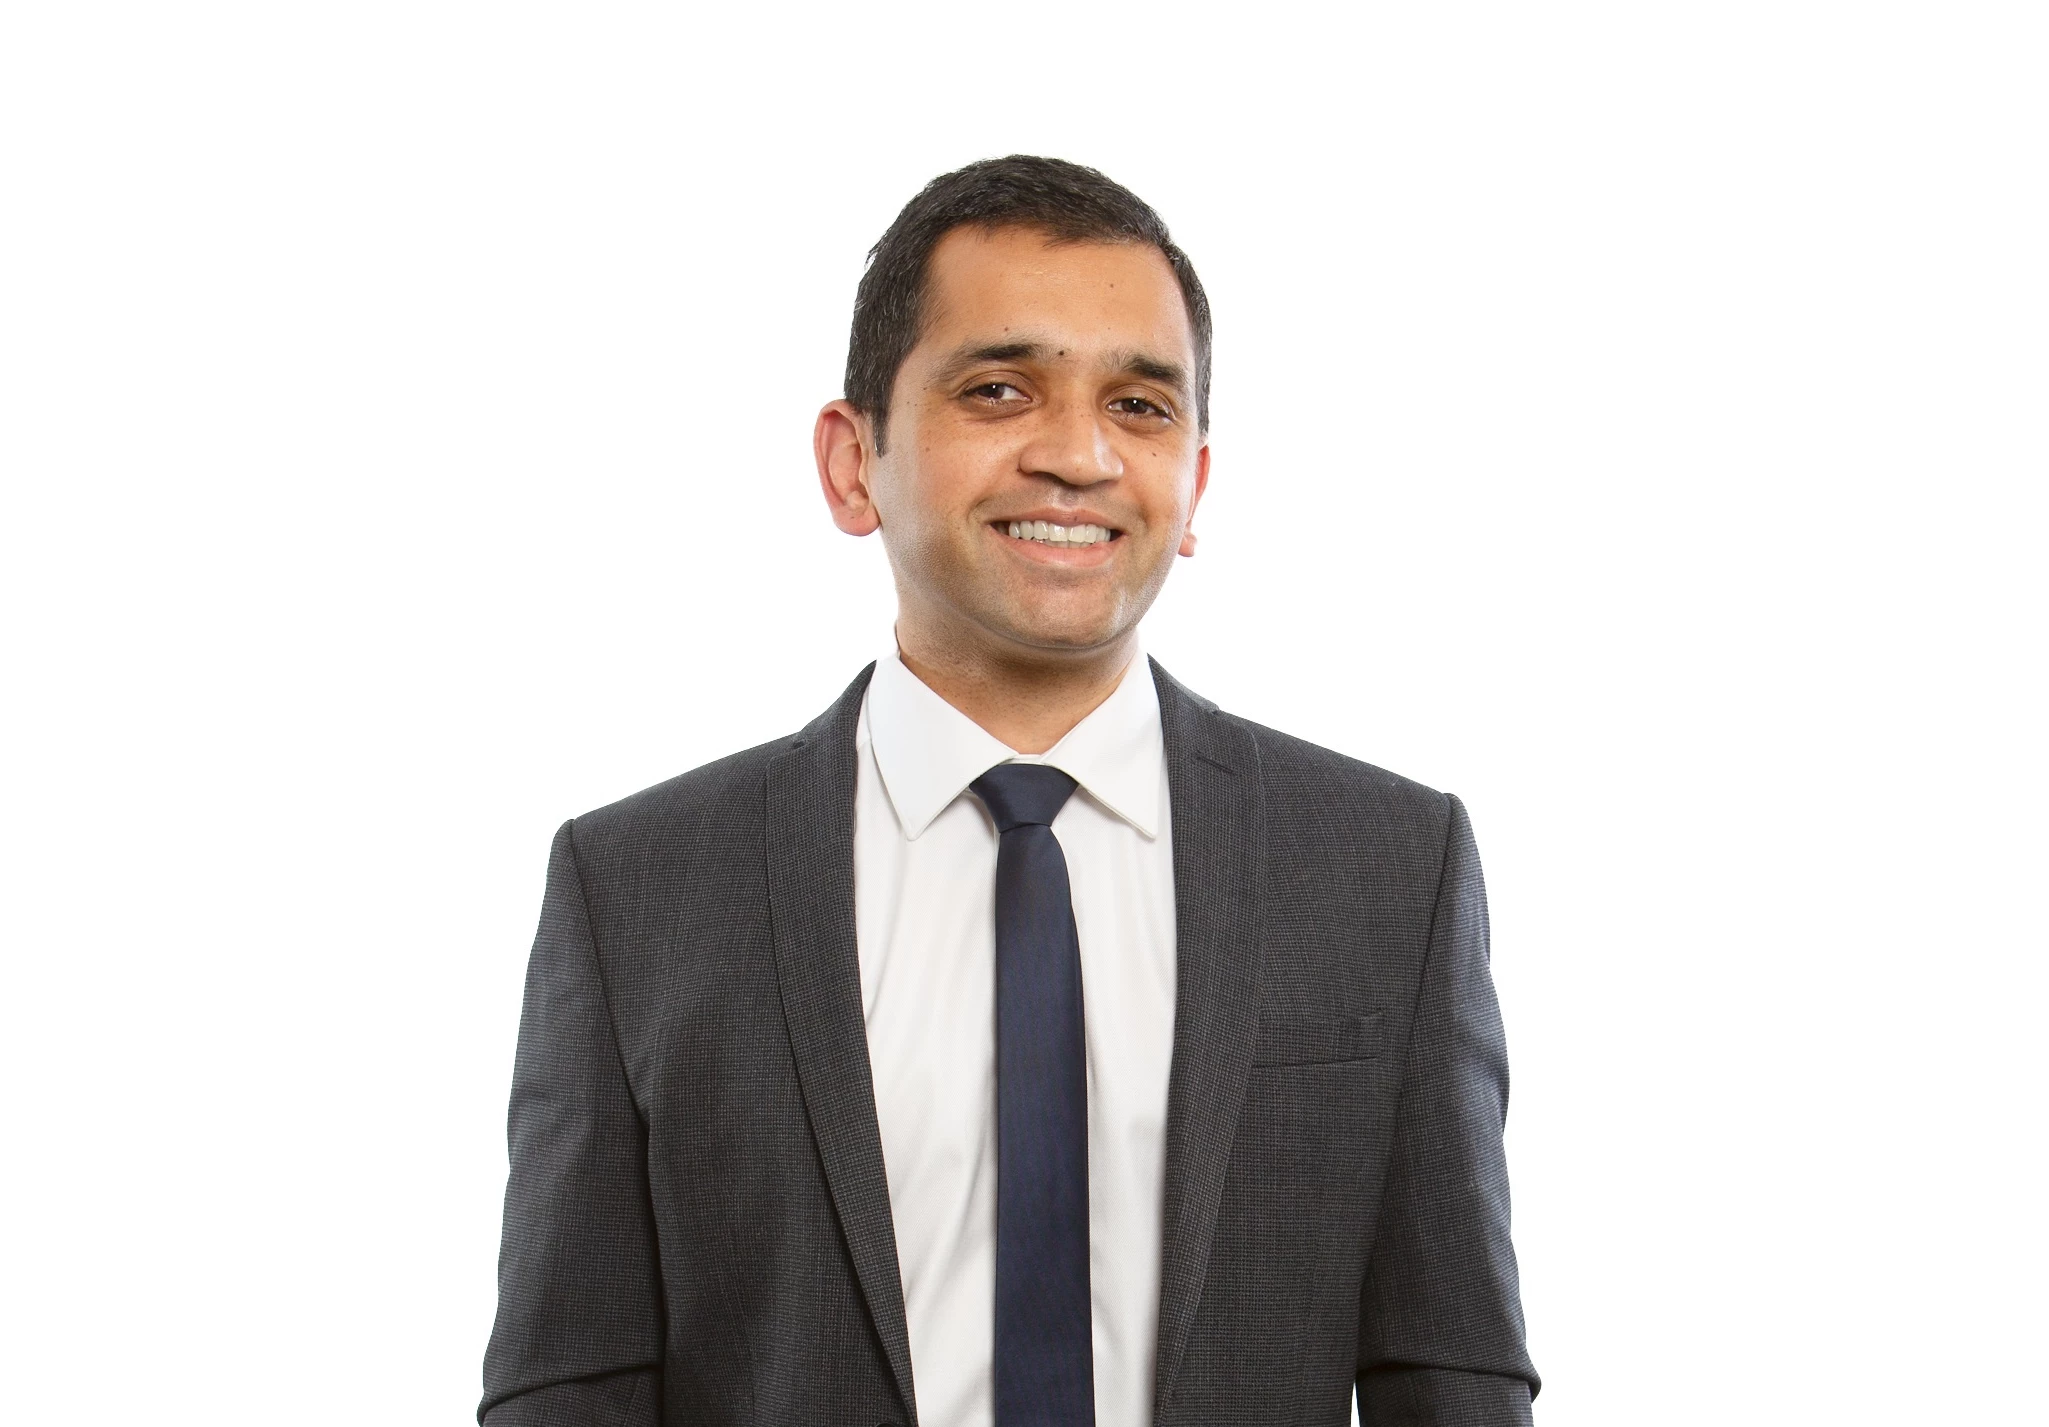 Gateley Legal Real Estate partner, Vijay Patel